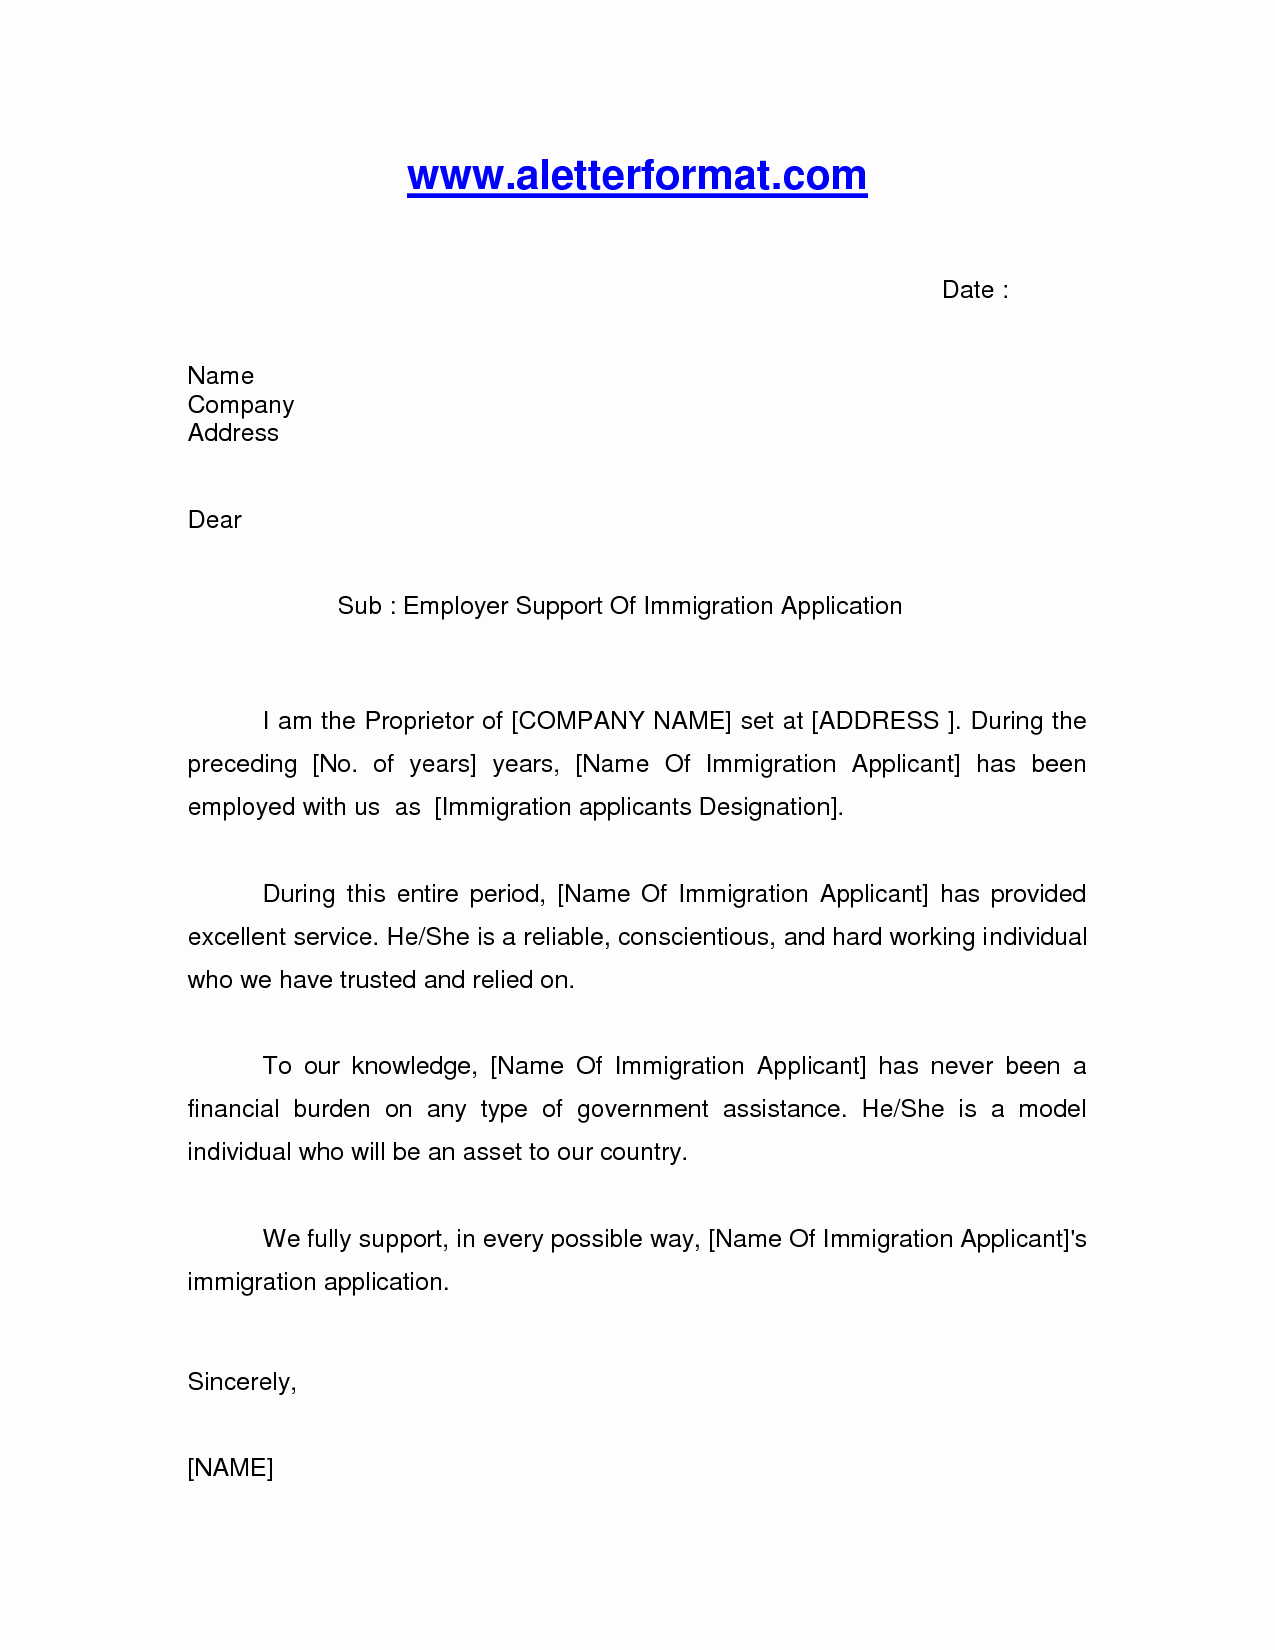 Work Reference Letter Sample Luxury Job Letter for Immigration